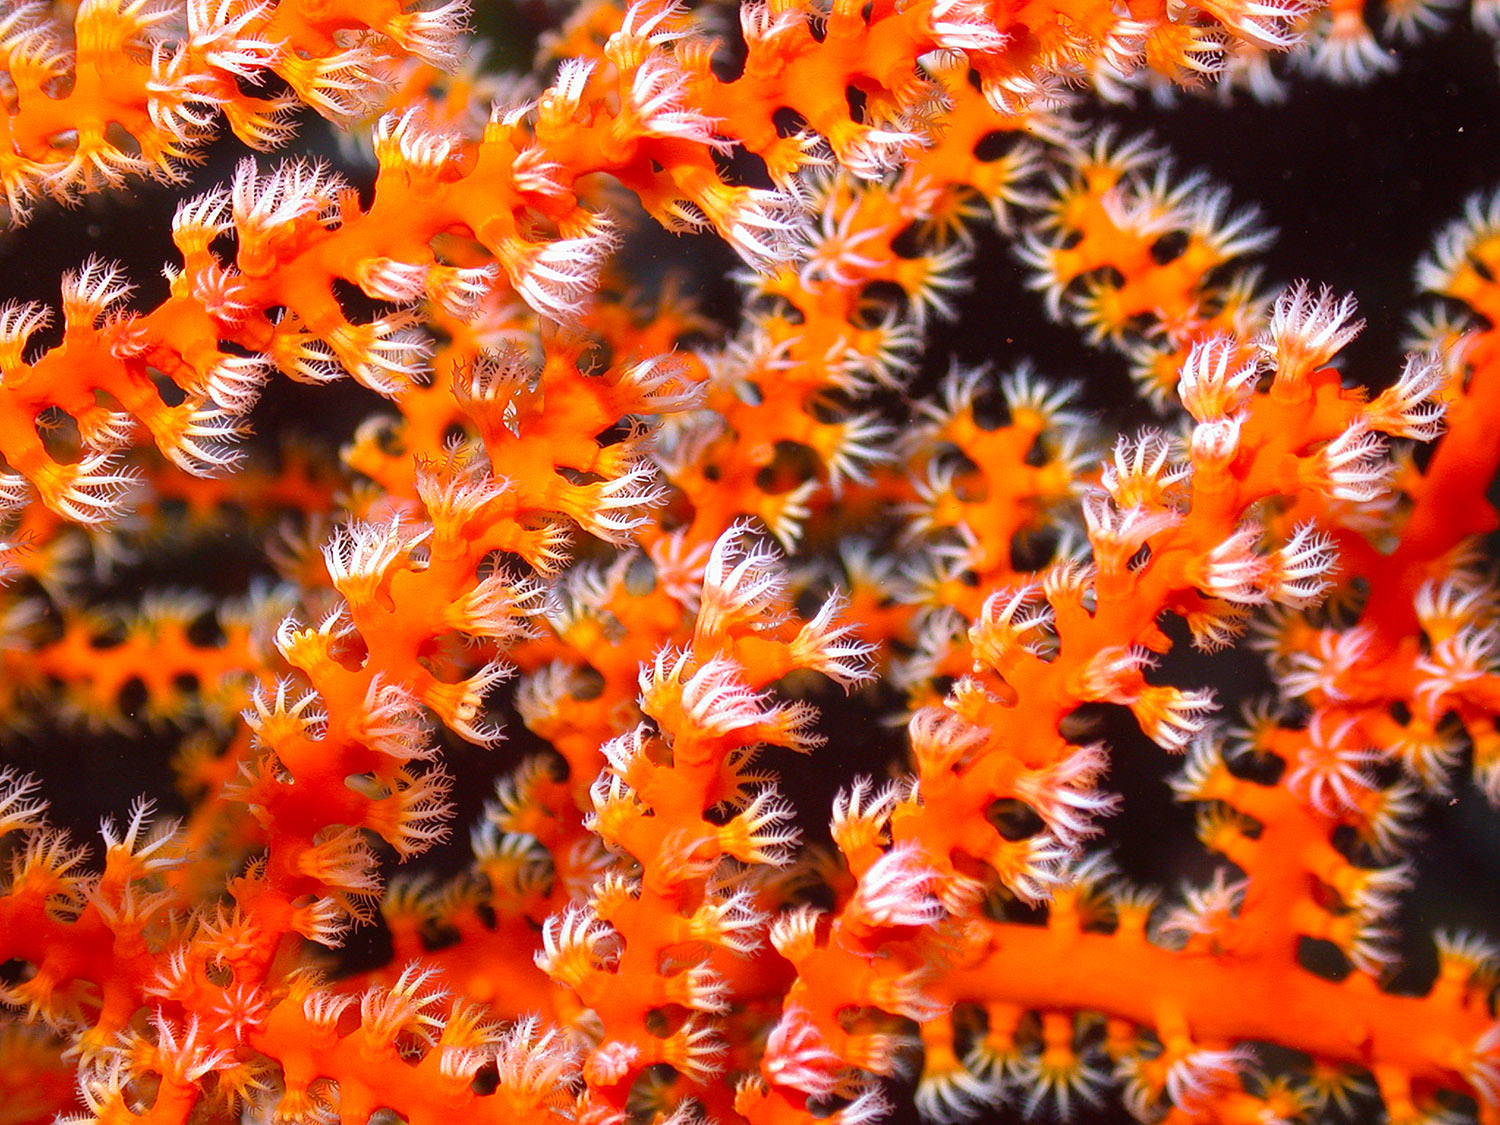 orange-coral-polyps-32s.jpg